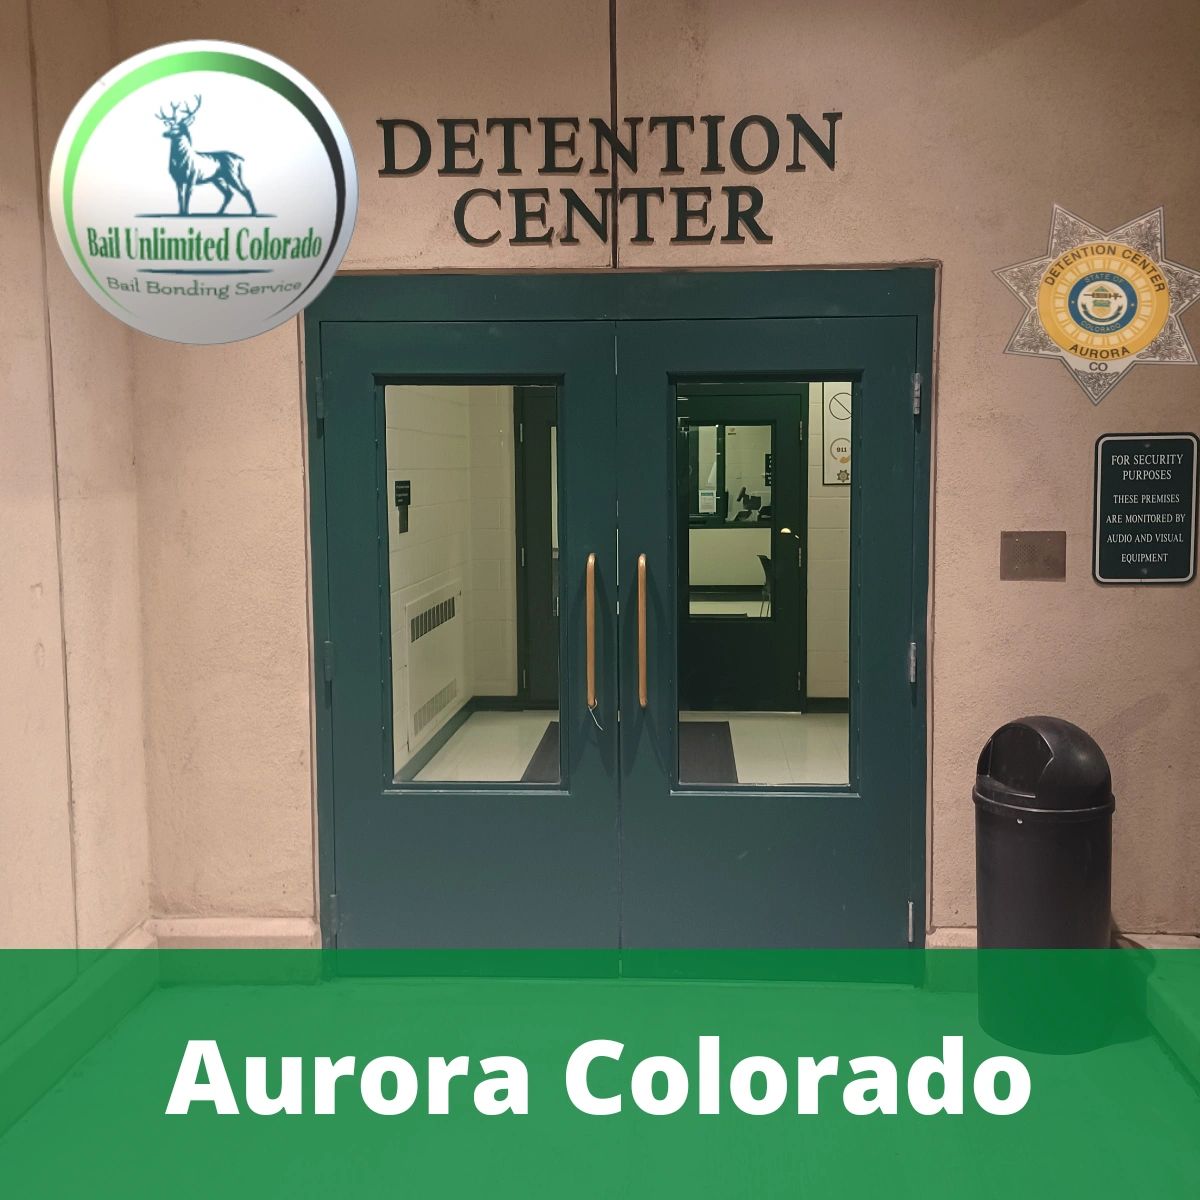 Aurora Colorado Detention Center LOGO Bail Unlimited Colorado IMAGE Front Entrance to Aurora CO Jail